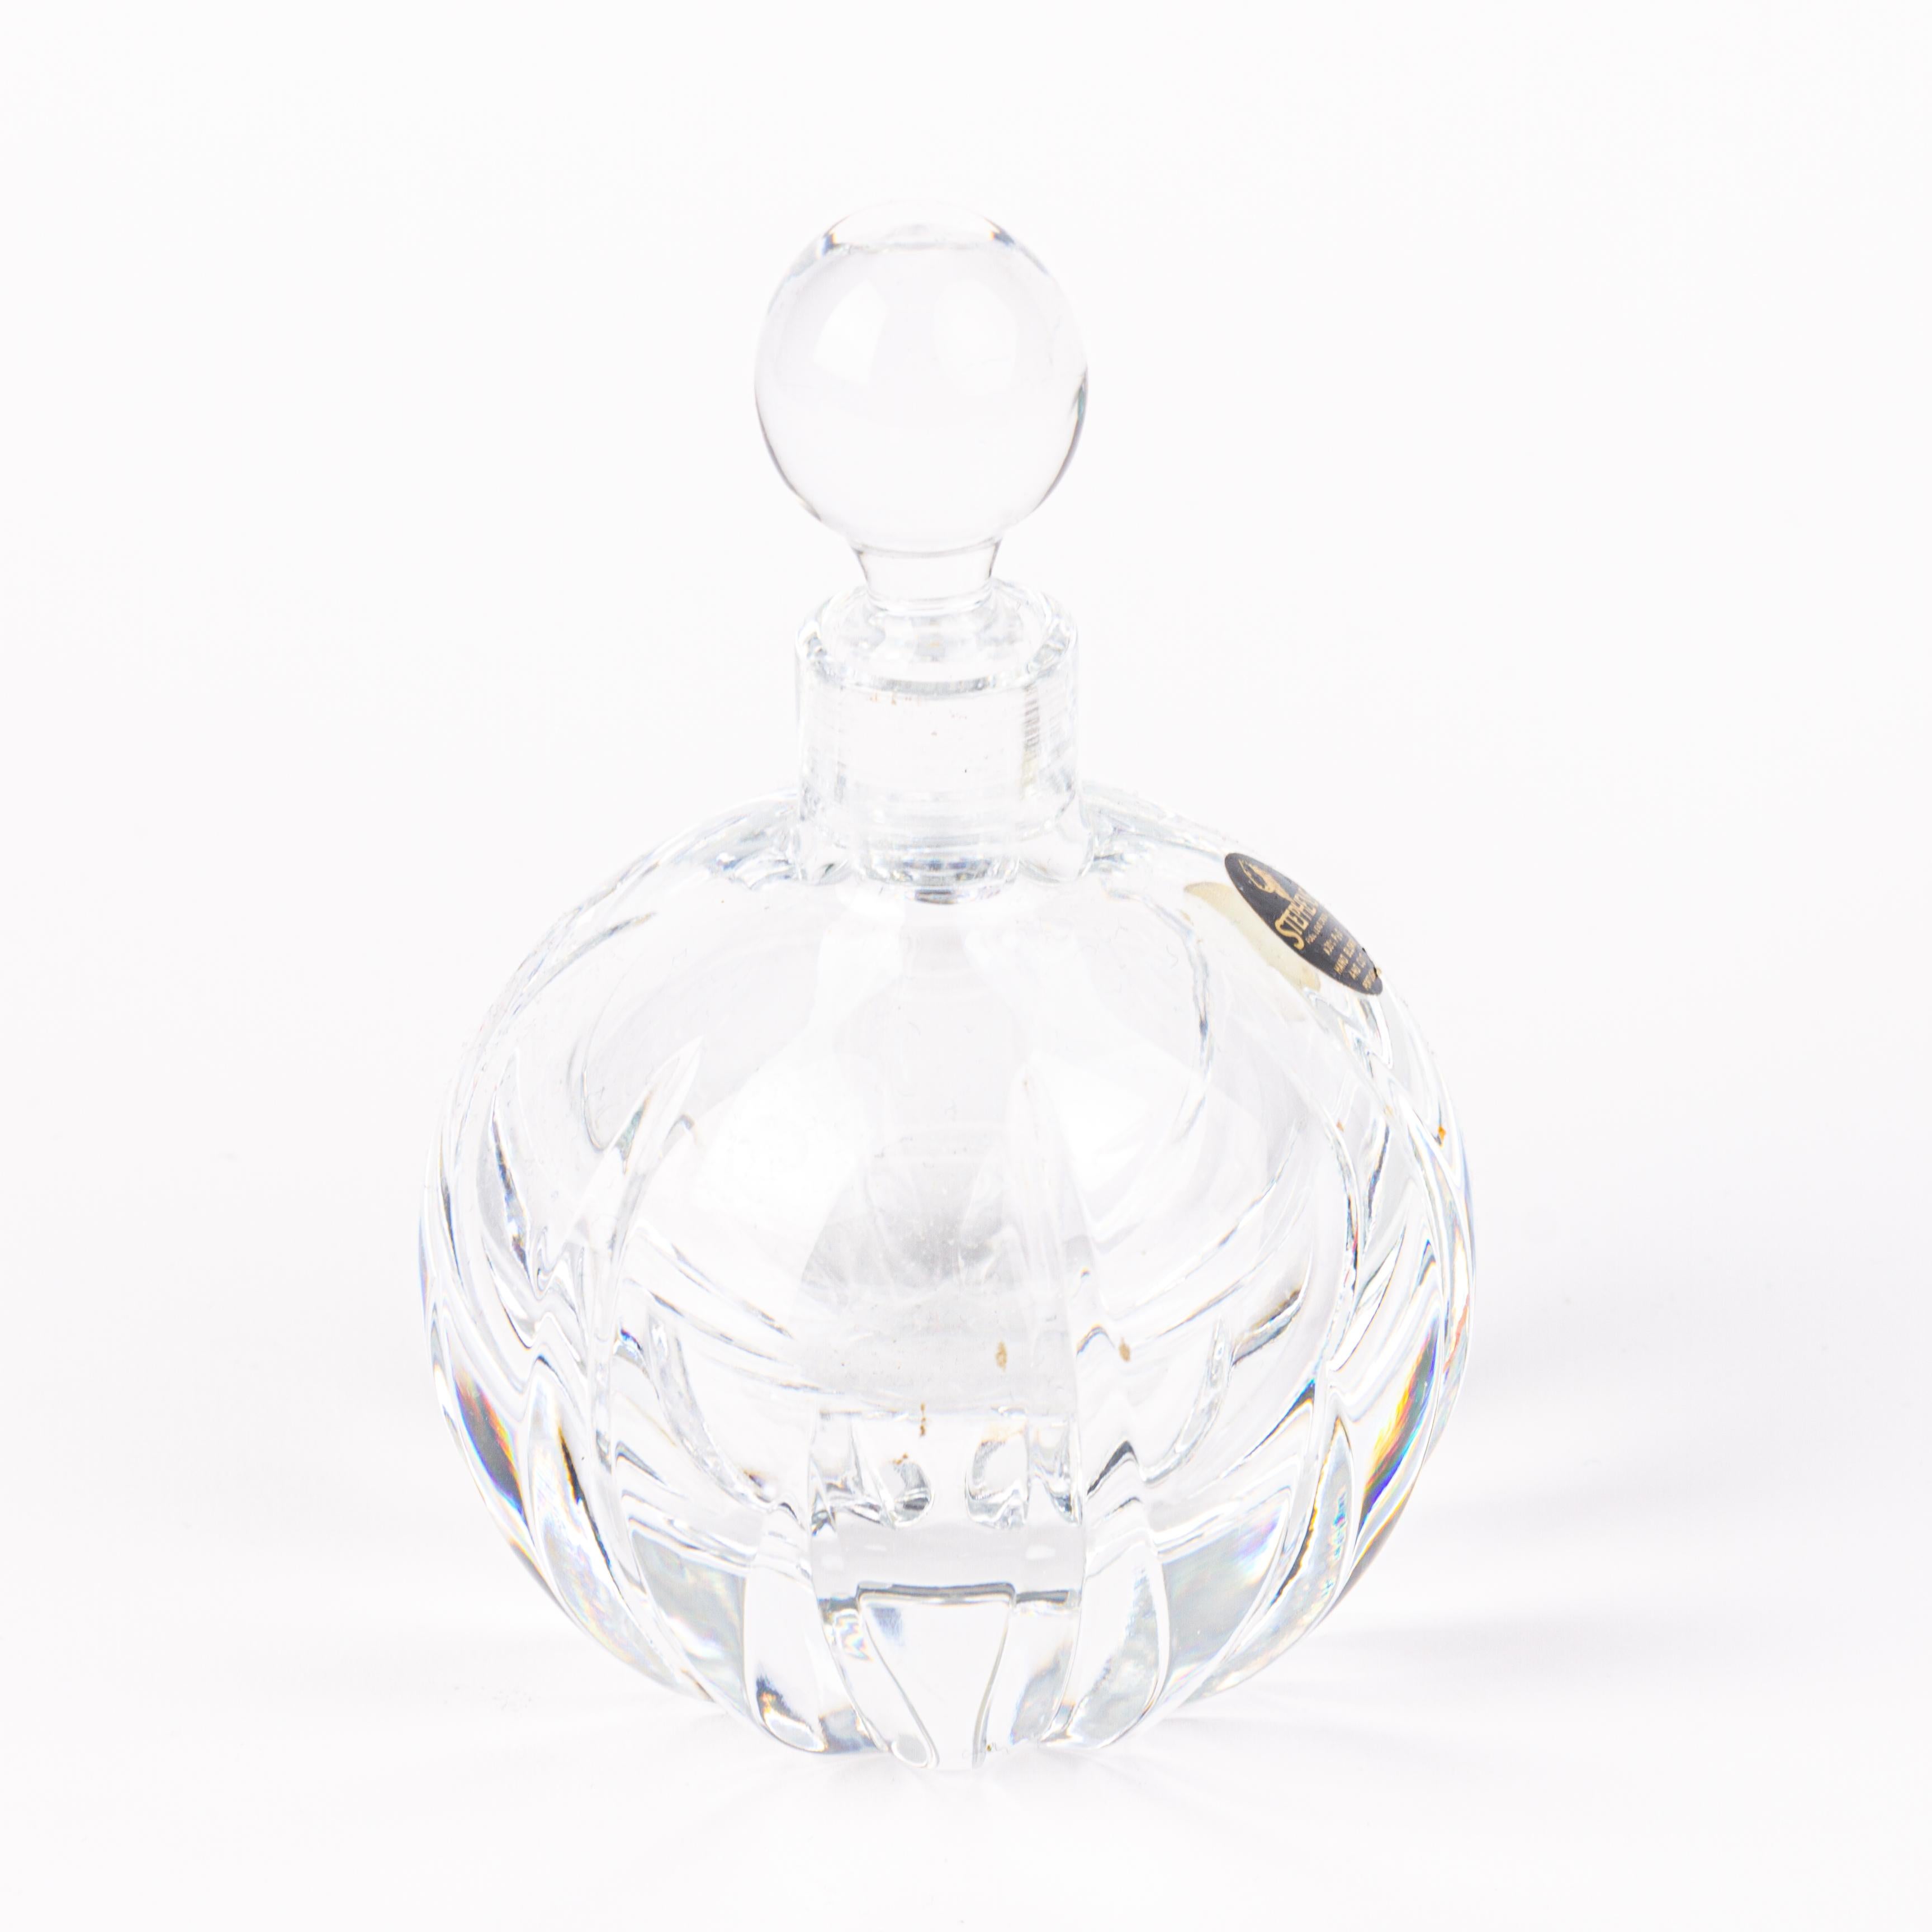 Cut Crystal Perfume Bottle 
Good condition
Free international shipping.